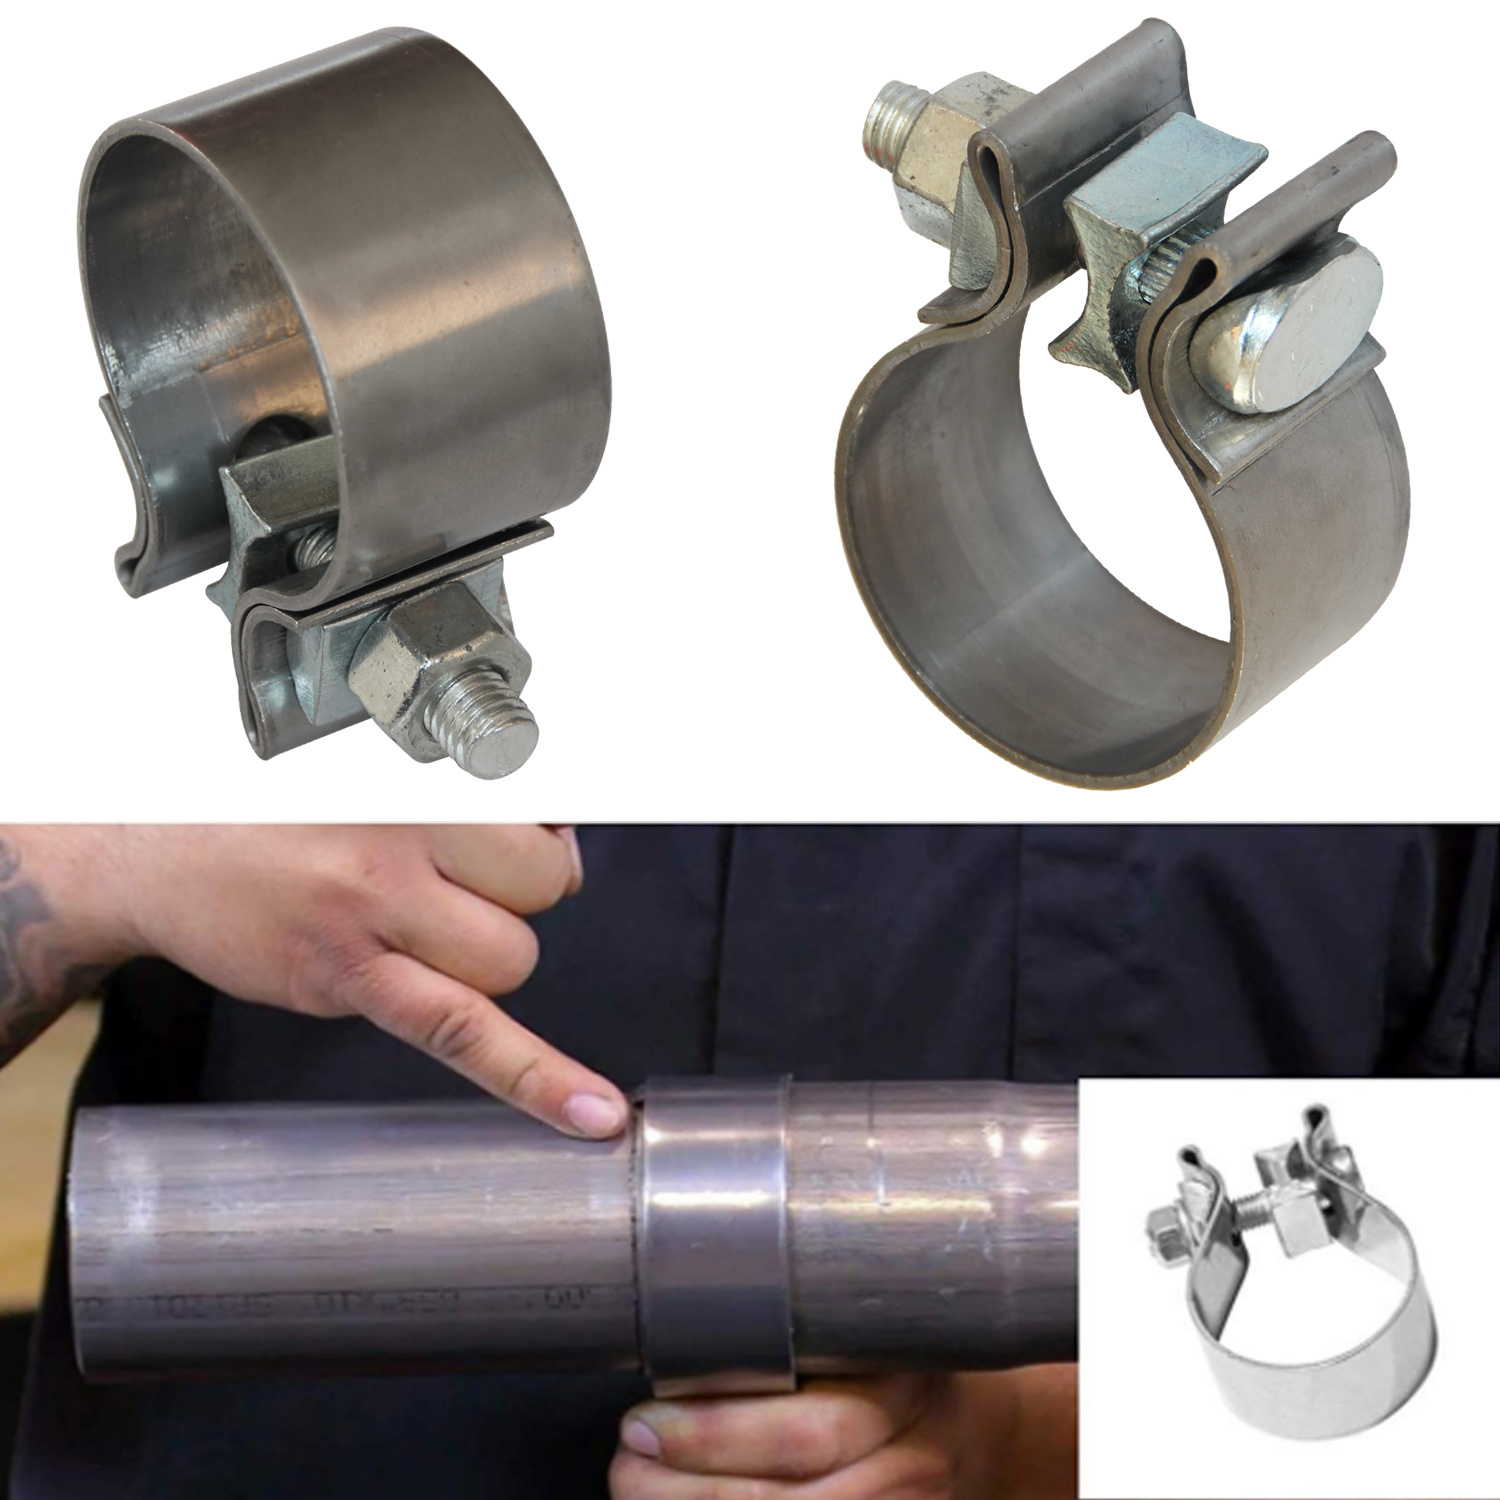 1.75” Exhaust Narrow Band Seal Clamp 2PCS Muffler Pipes Connect